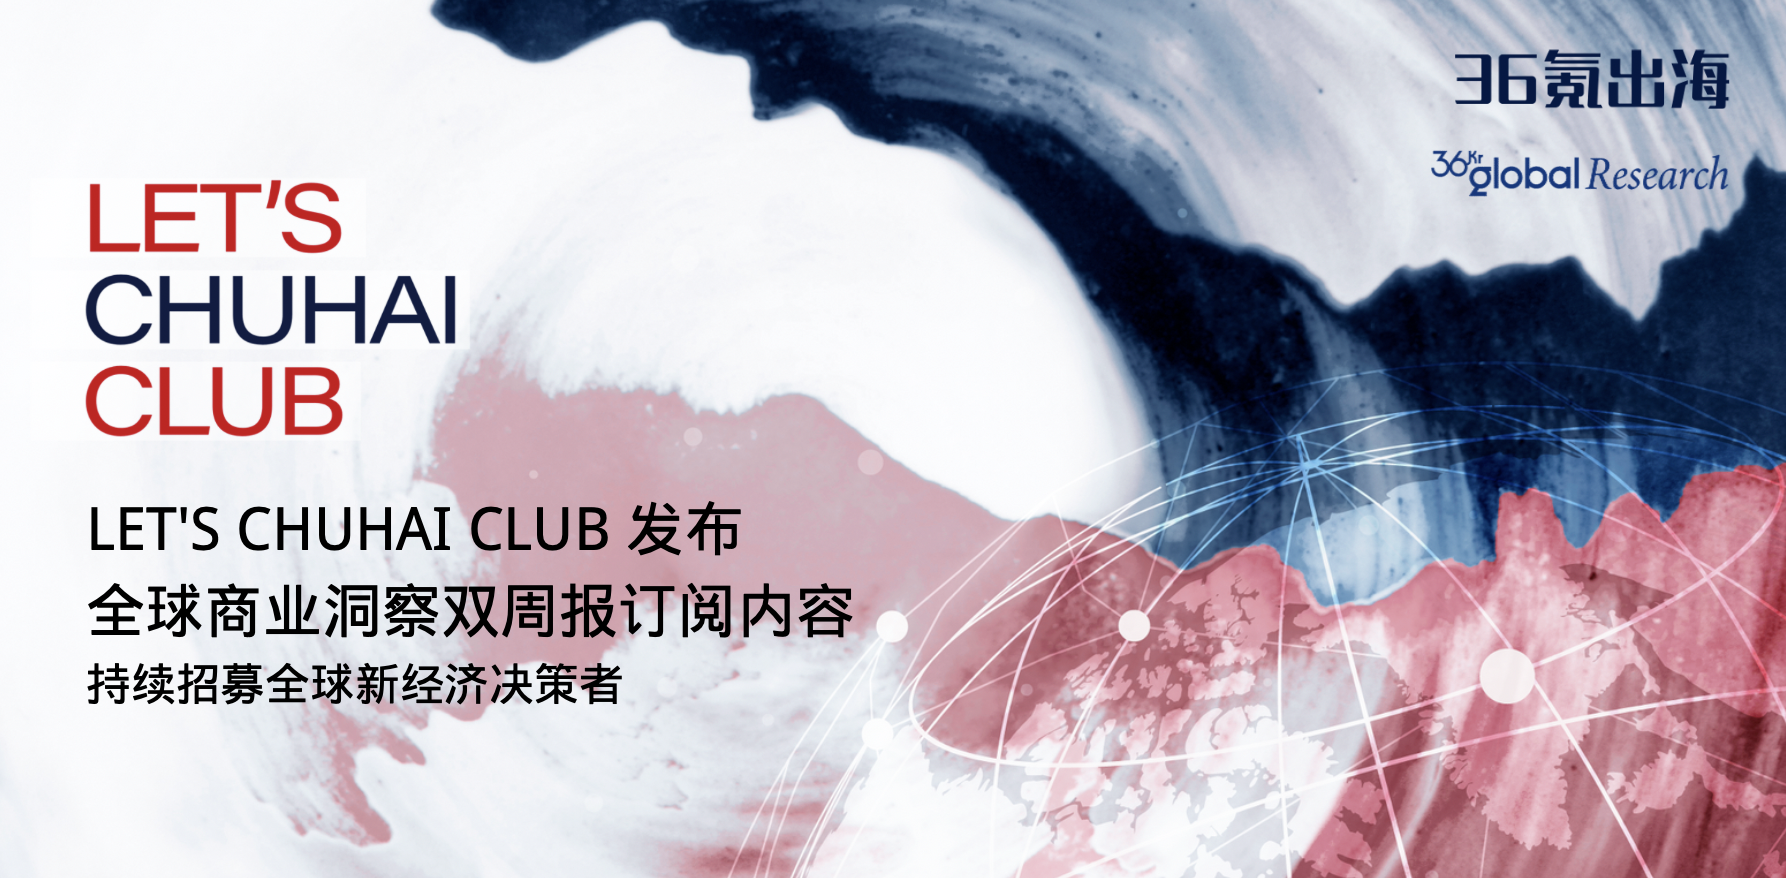 LET’S CHUHAI CLUB 发布《全球商业洞察双周报 Vol.4》订阅内容｜持续招募全球新经济决策者